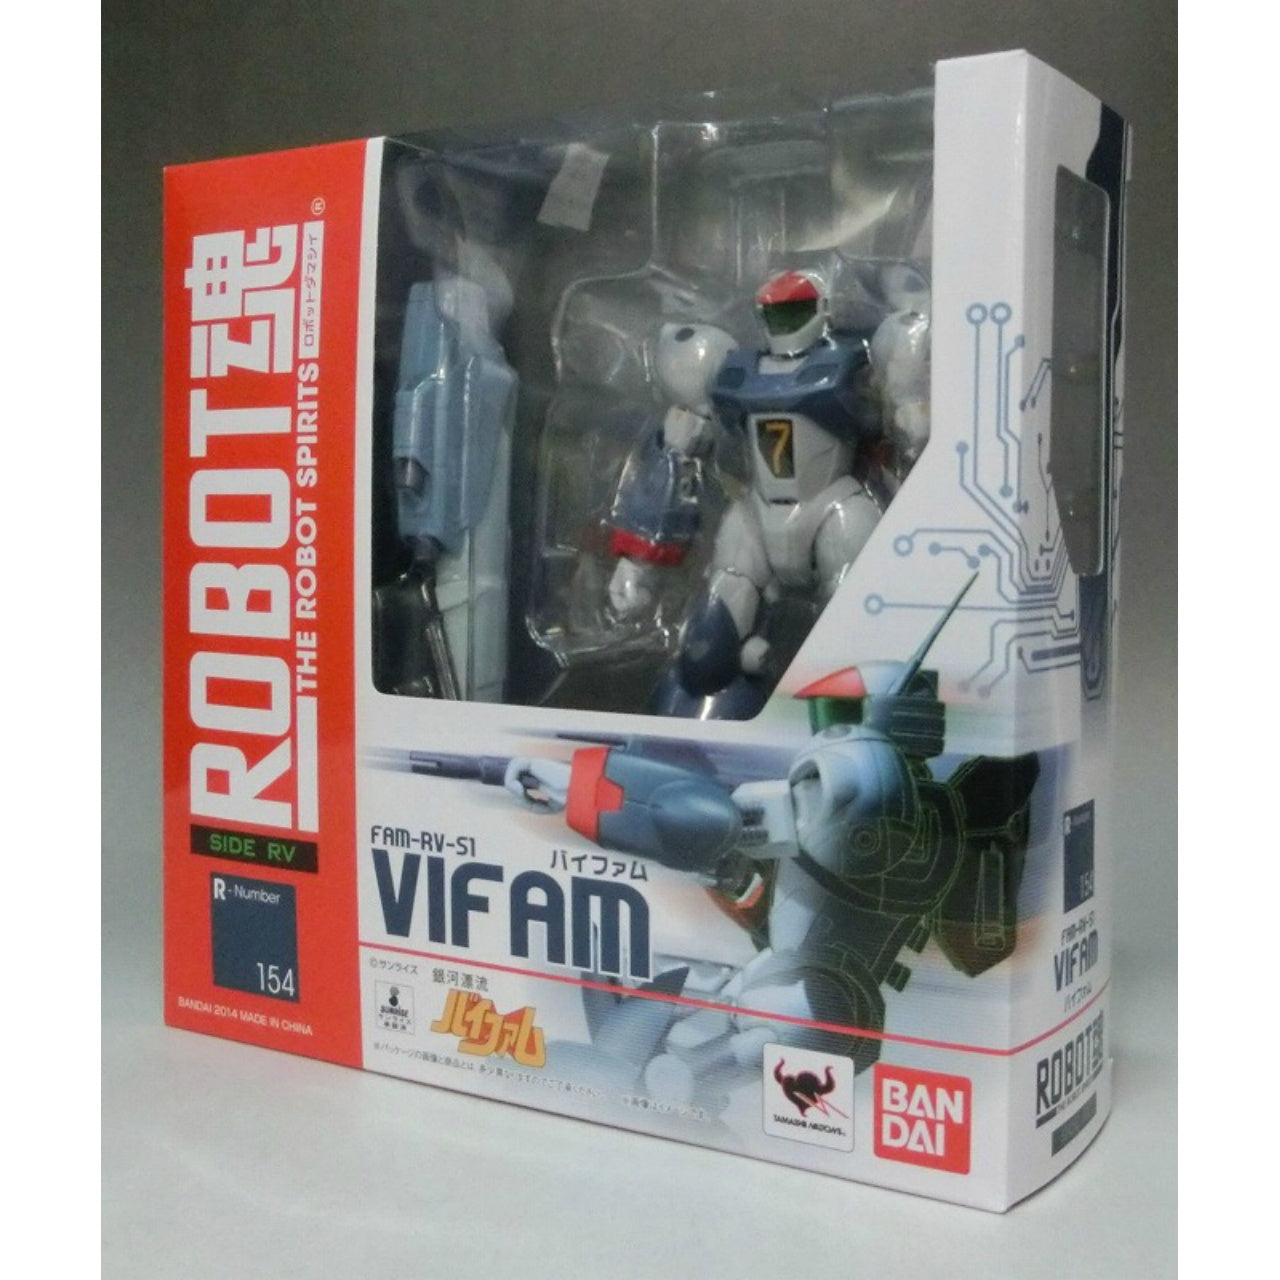 ROBOT Tamashii 154 Vifam